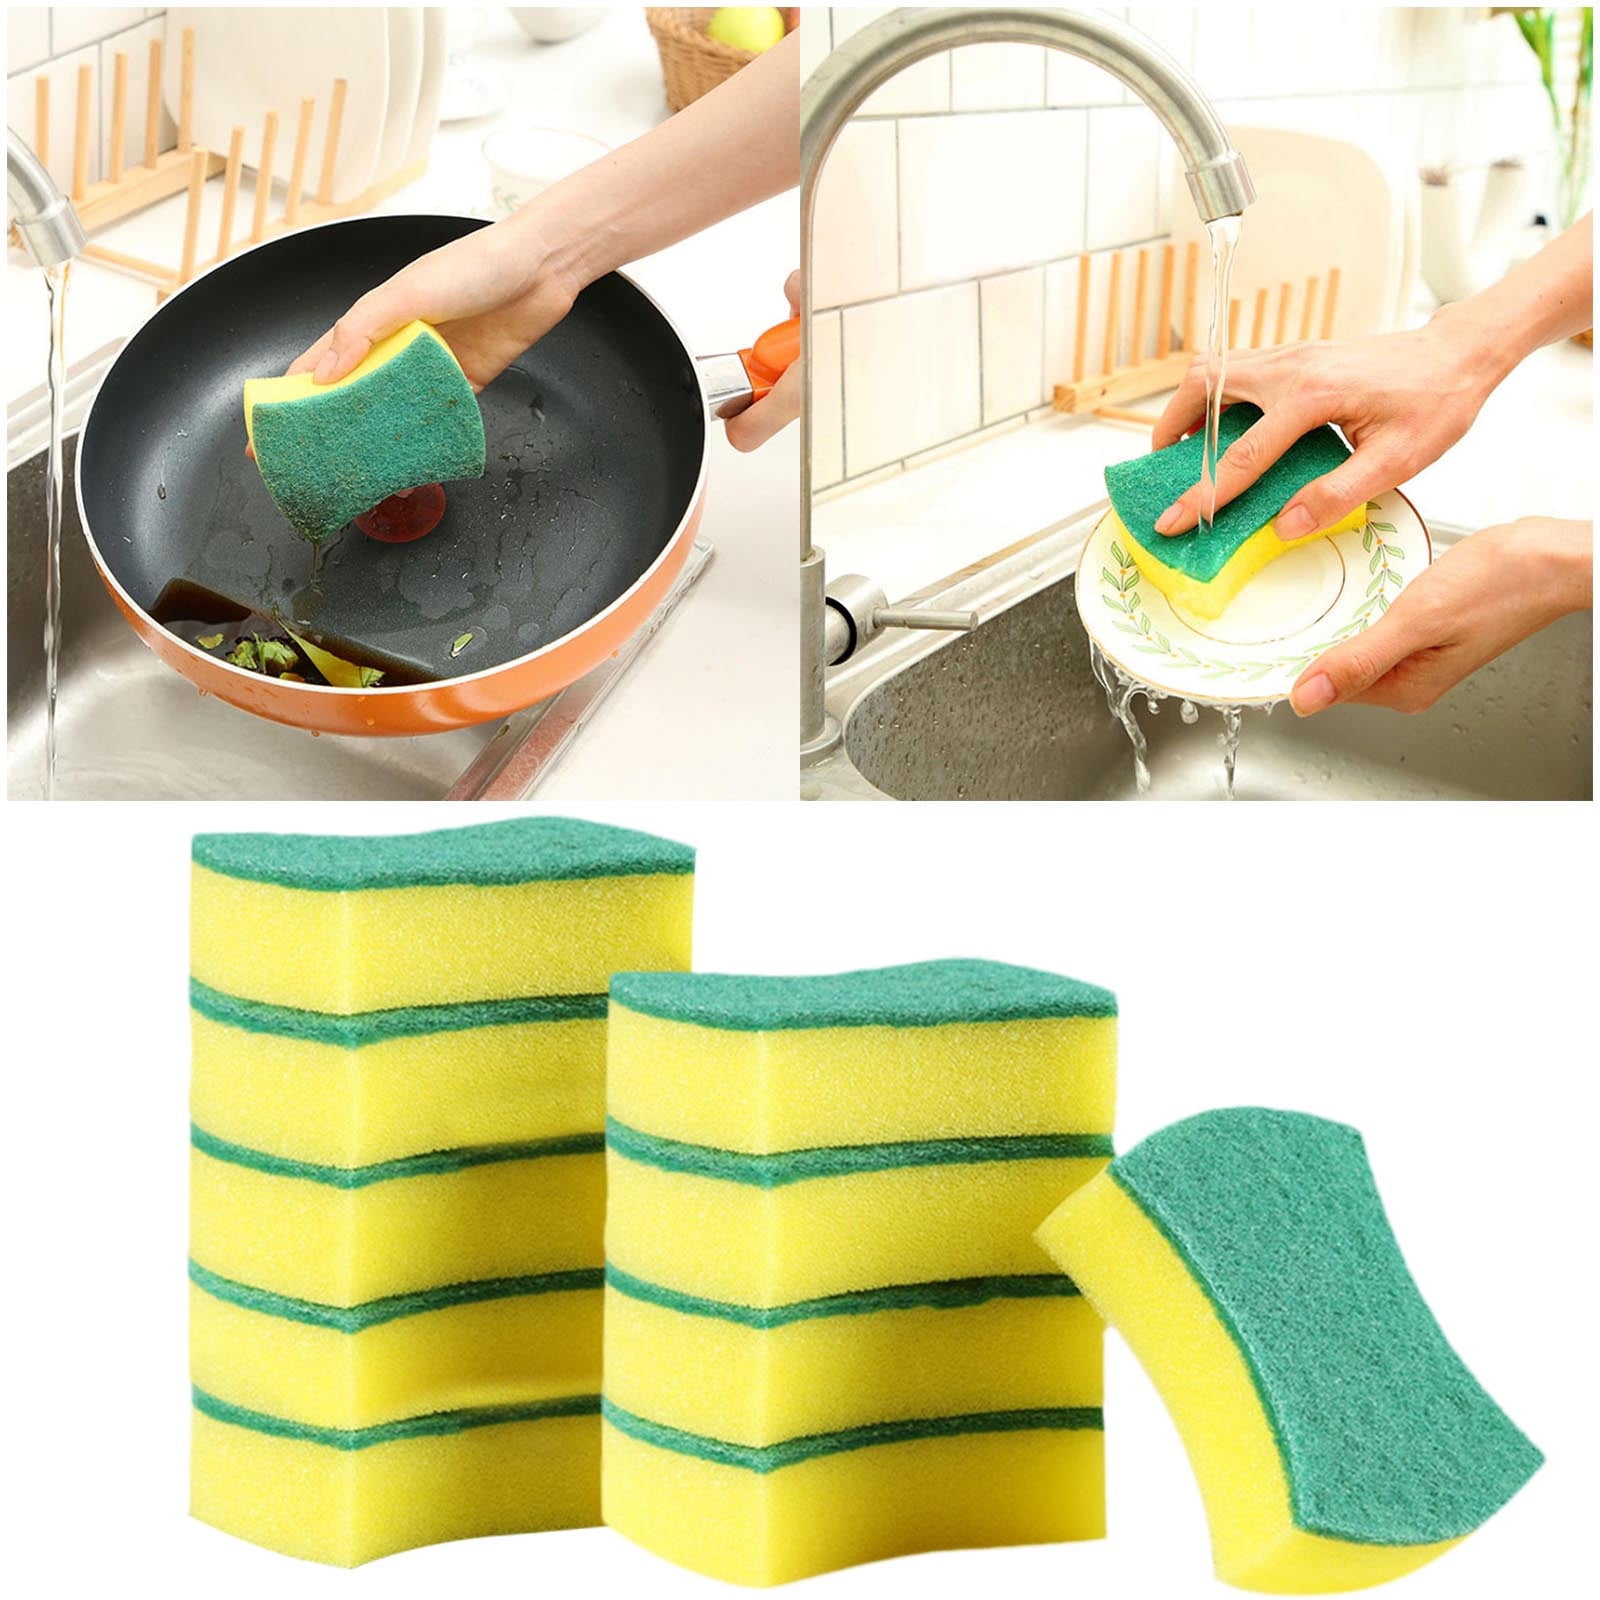 10PCS Kitchen Dish Cleaning Washing Catering Scourer Scouring Sponge Pad Set 